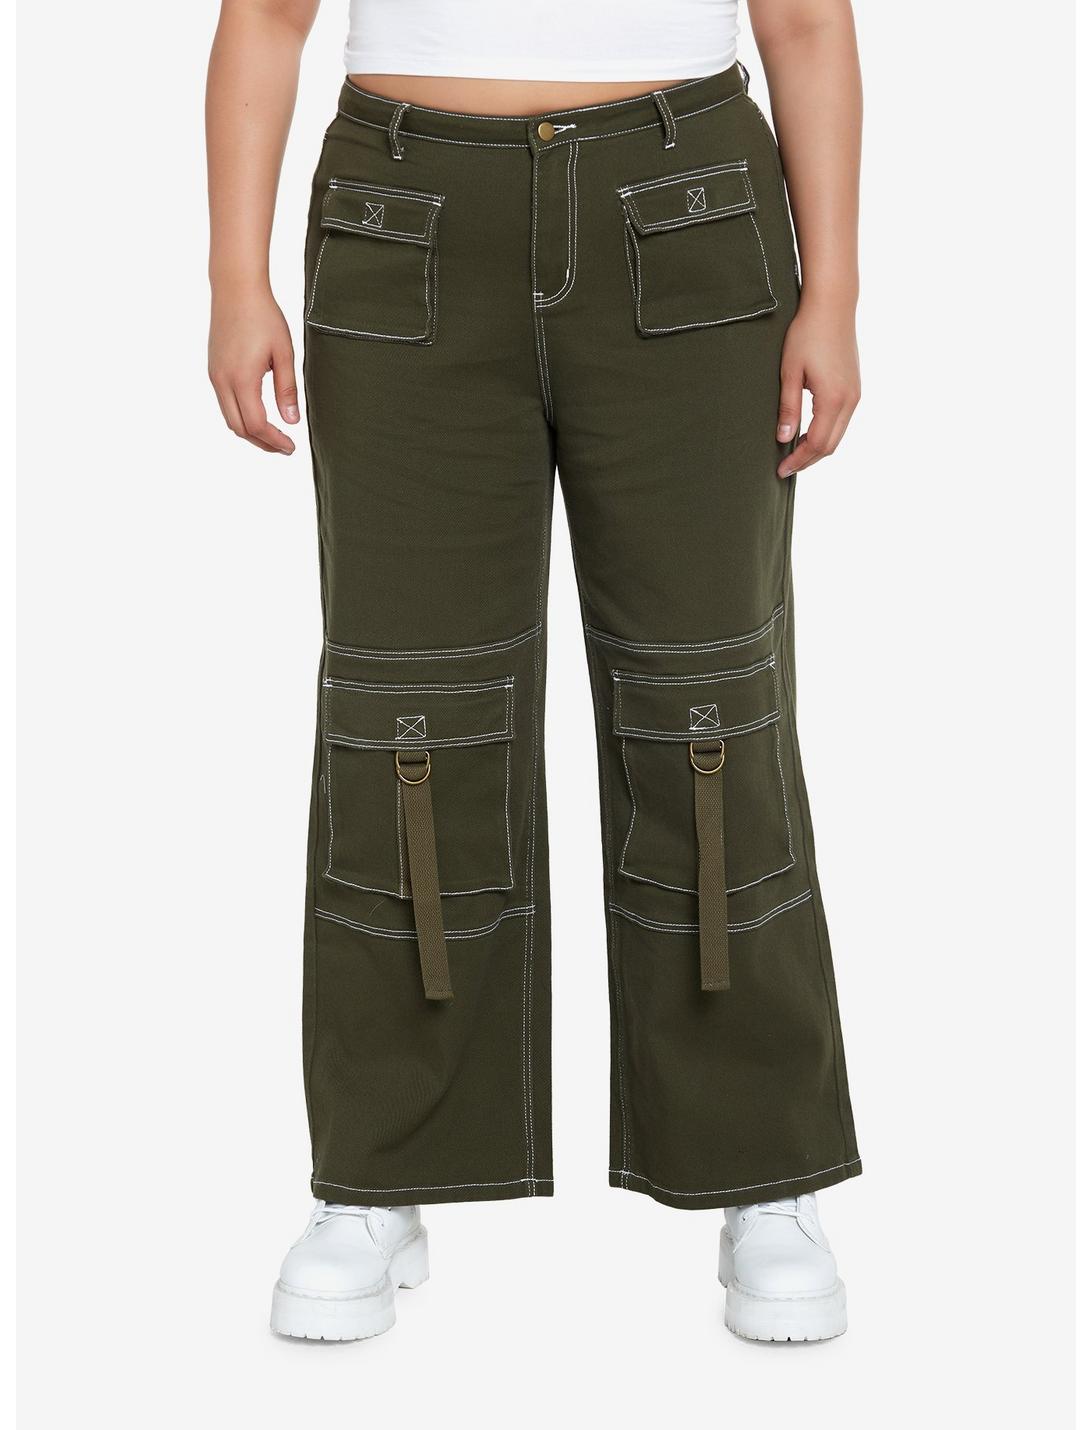 Green & White Contrast Stitch Strap Carpenter Pants Plus Size, GREEN, hi-res